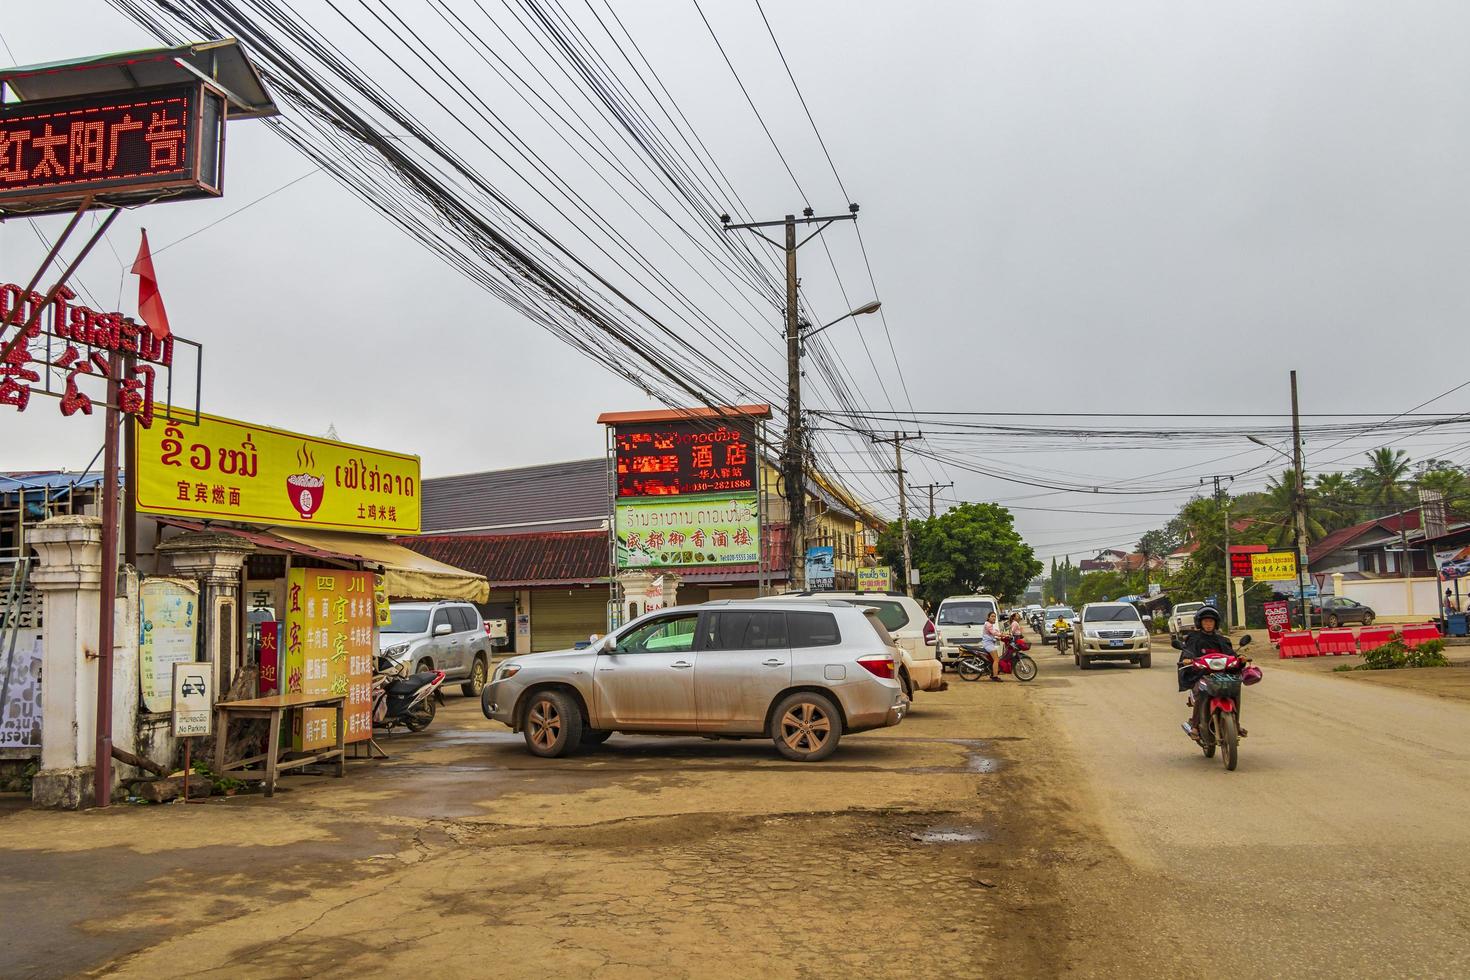 luang prabang, laos 2018- färgglada vägar gator stadsbild molnig dag i luang prabang laos foto